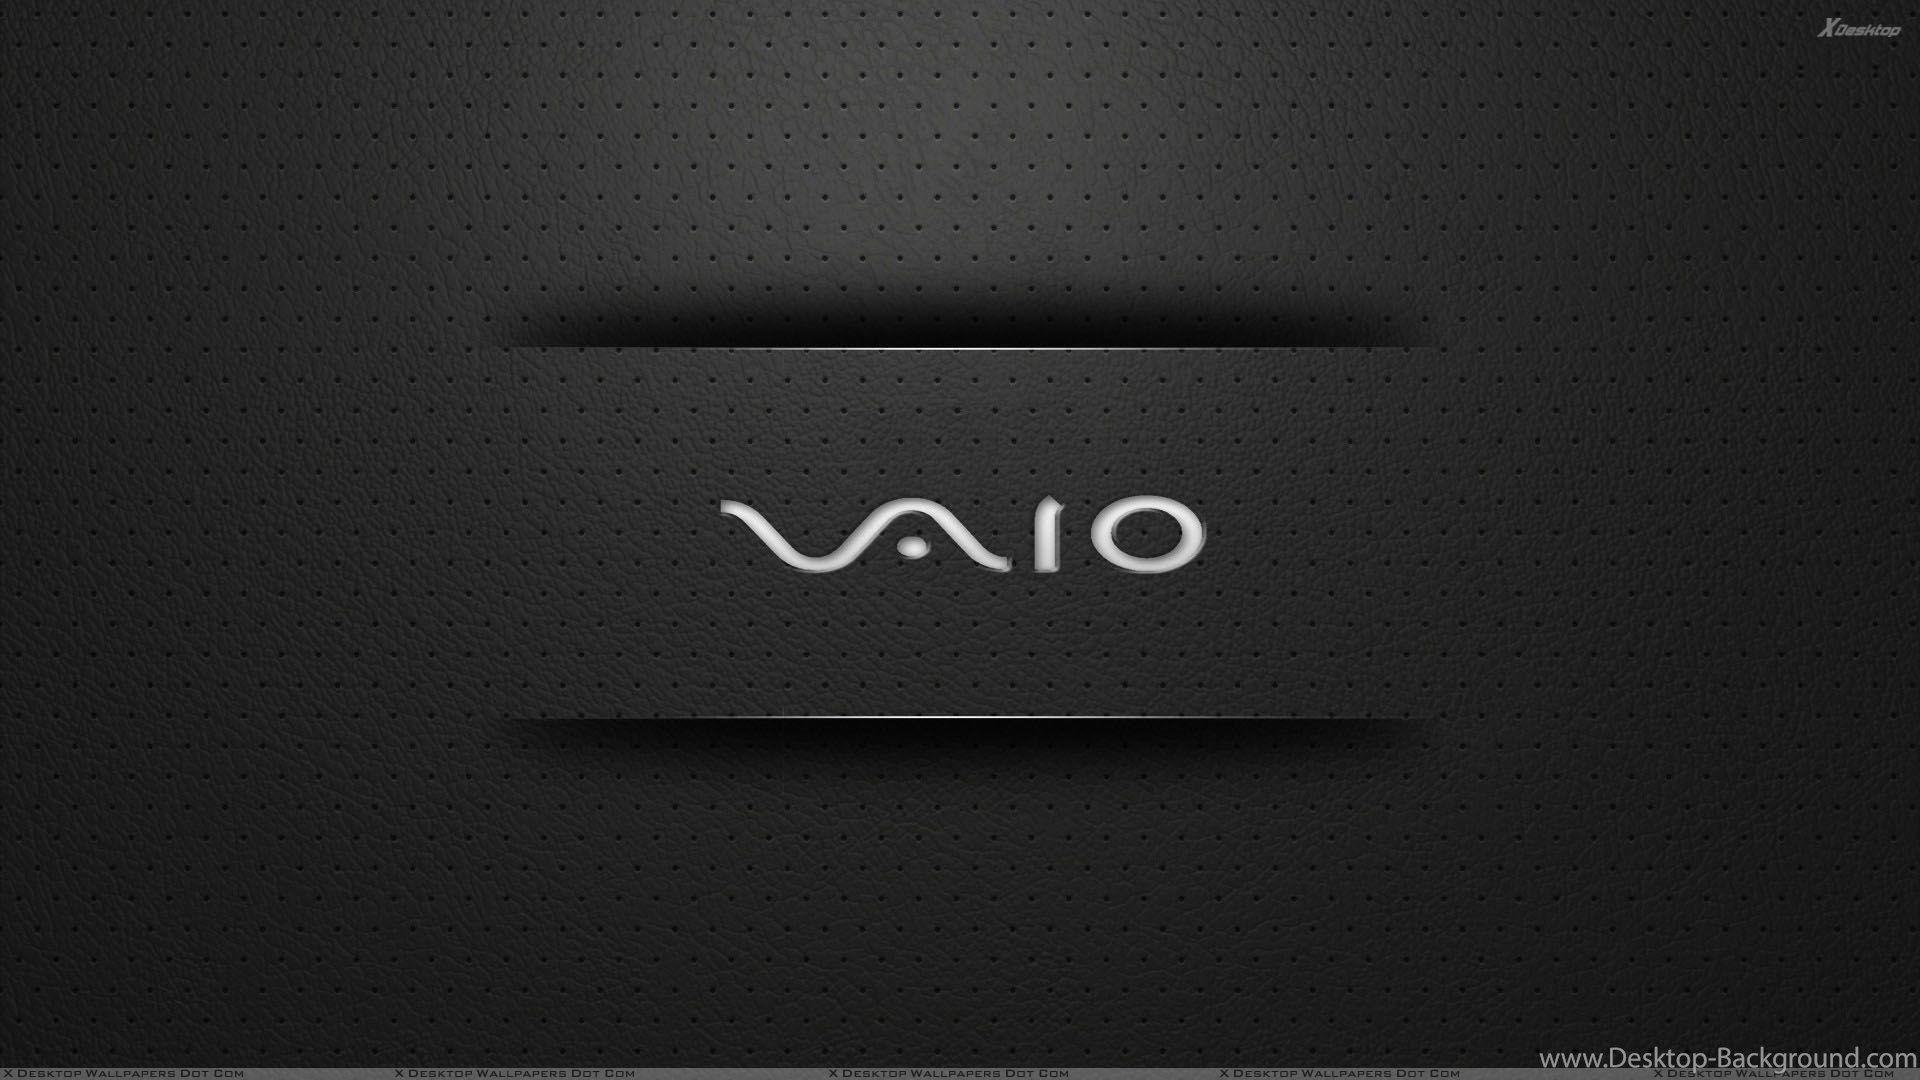 Vaio Logo - Sony Vaio LoGo On Black Dotted Background Wallpaper Desktop Background